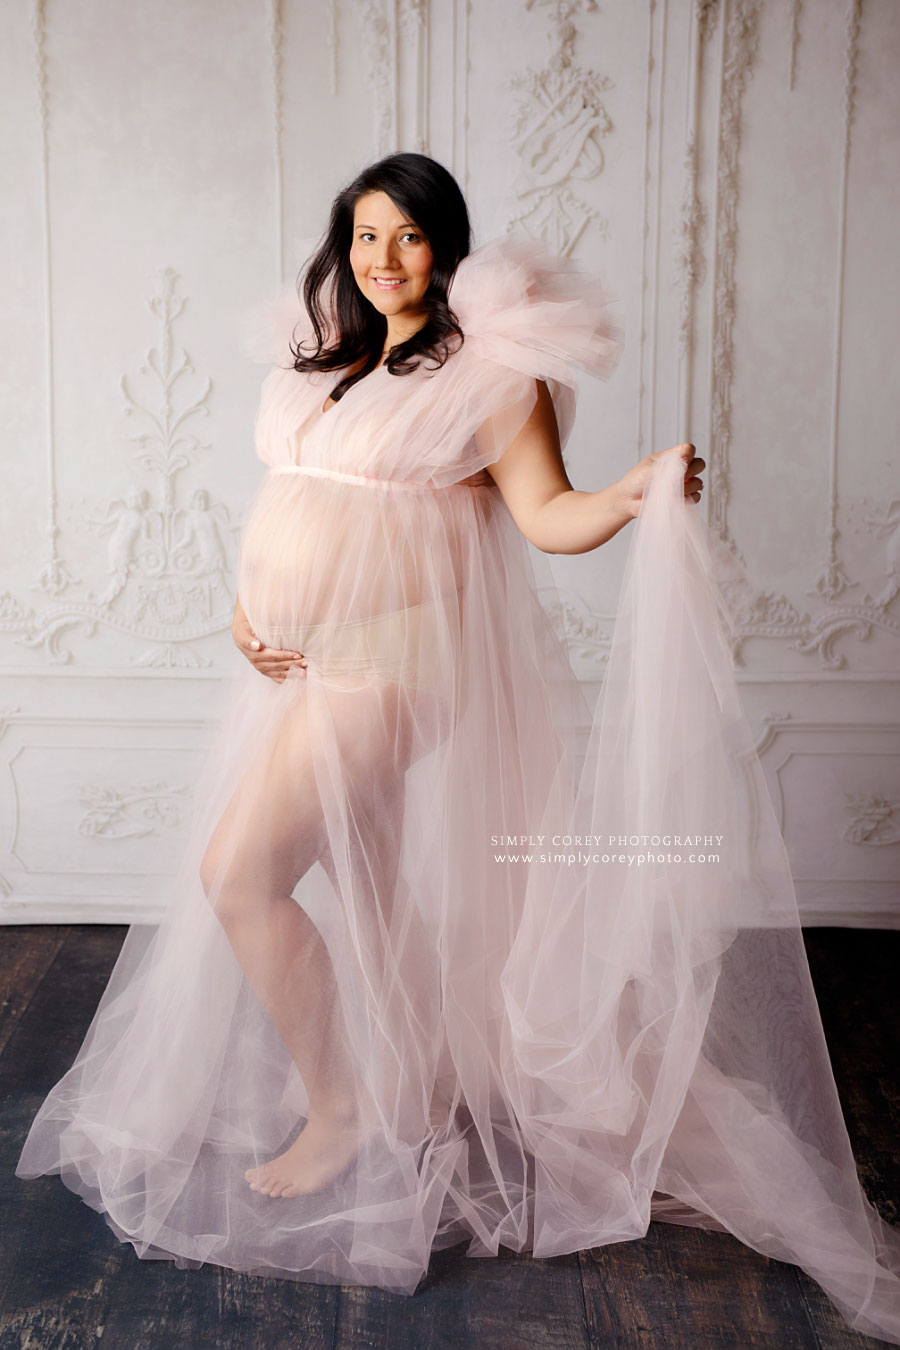 Newnan maternity photographer, studio pregnancy portrait in pink tulle dress